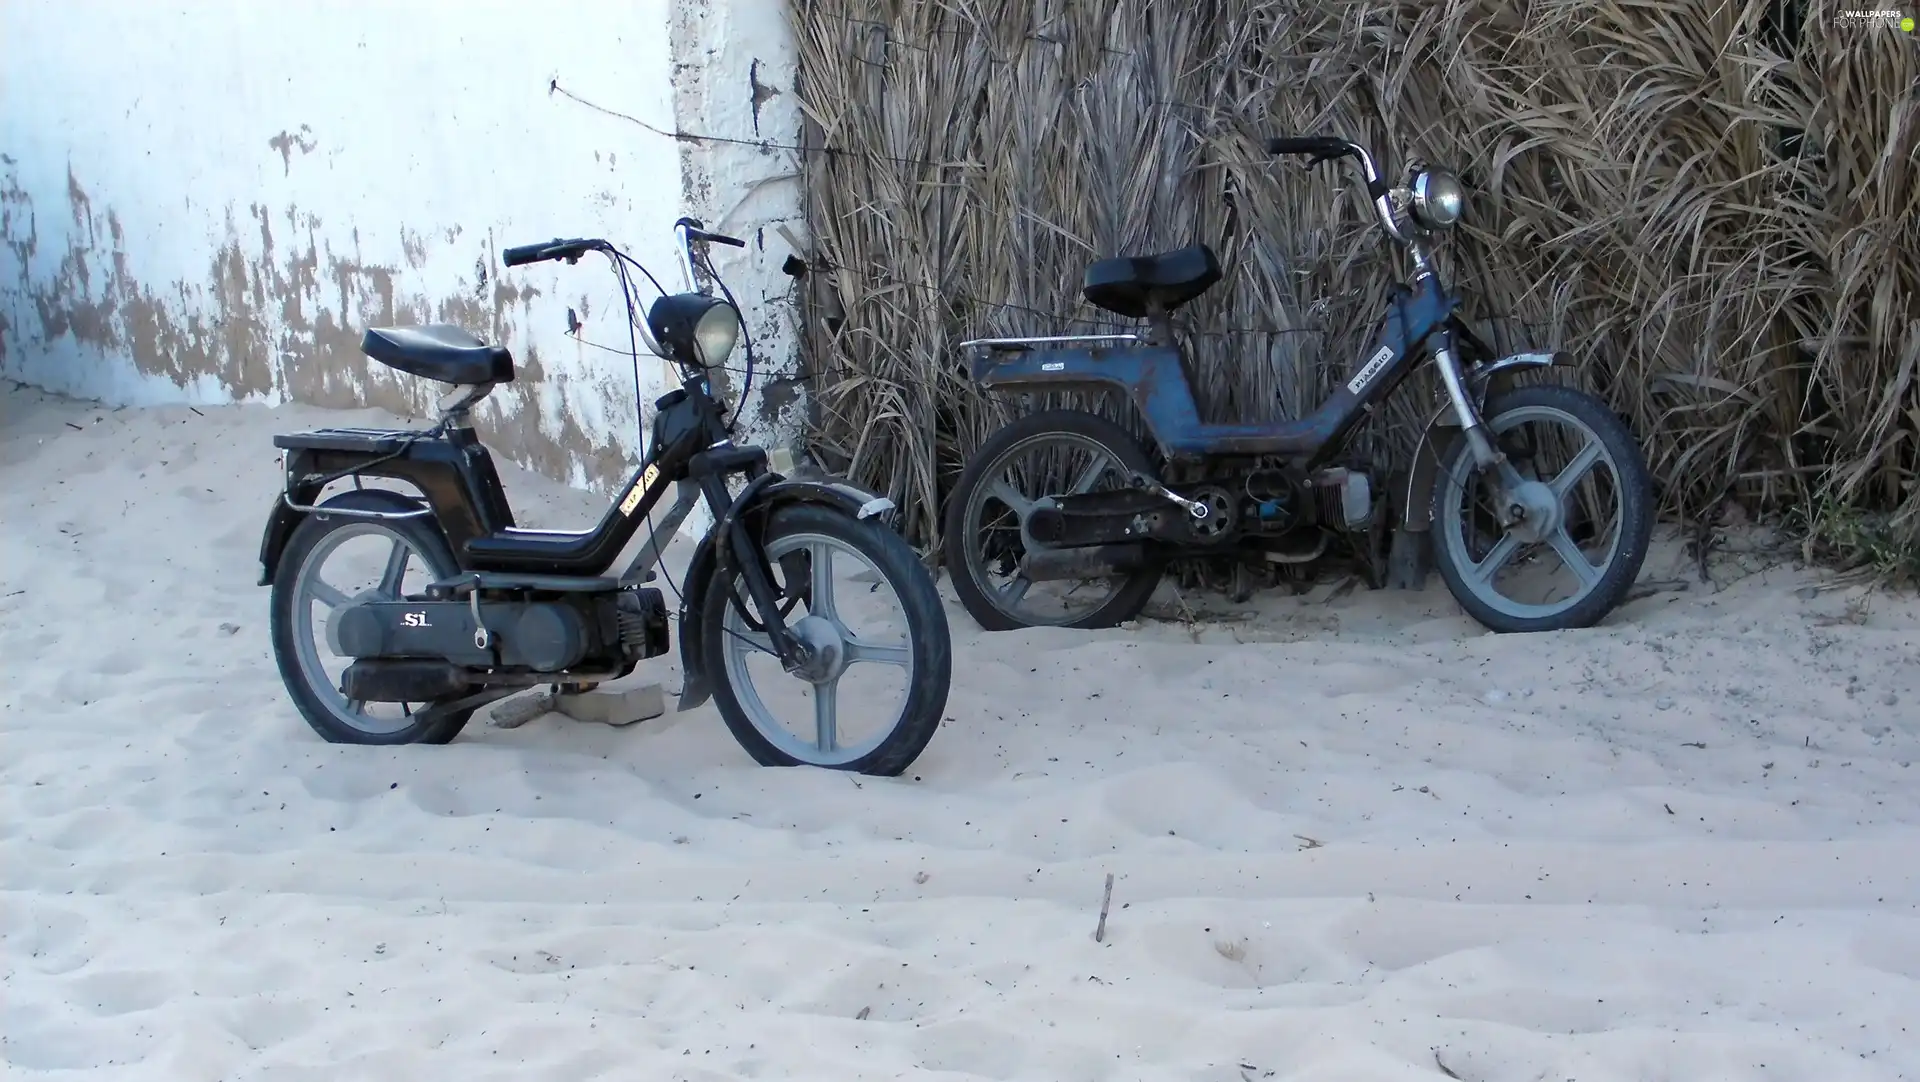 Tunisian, Scooter